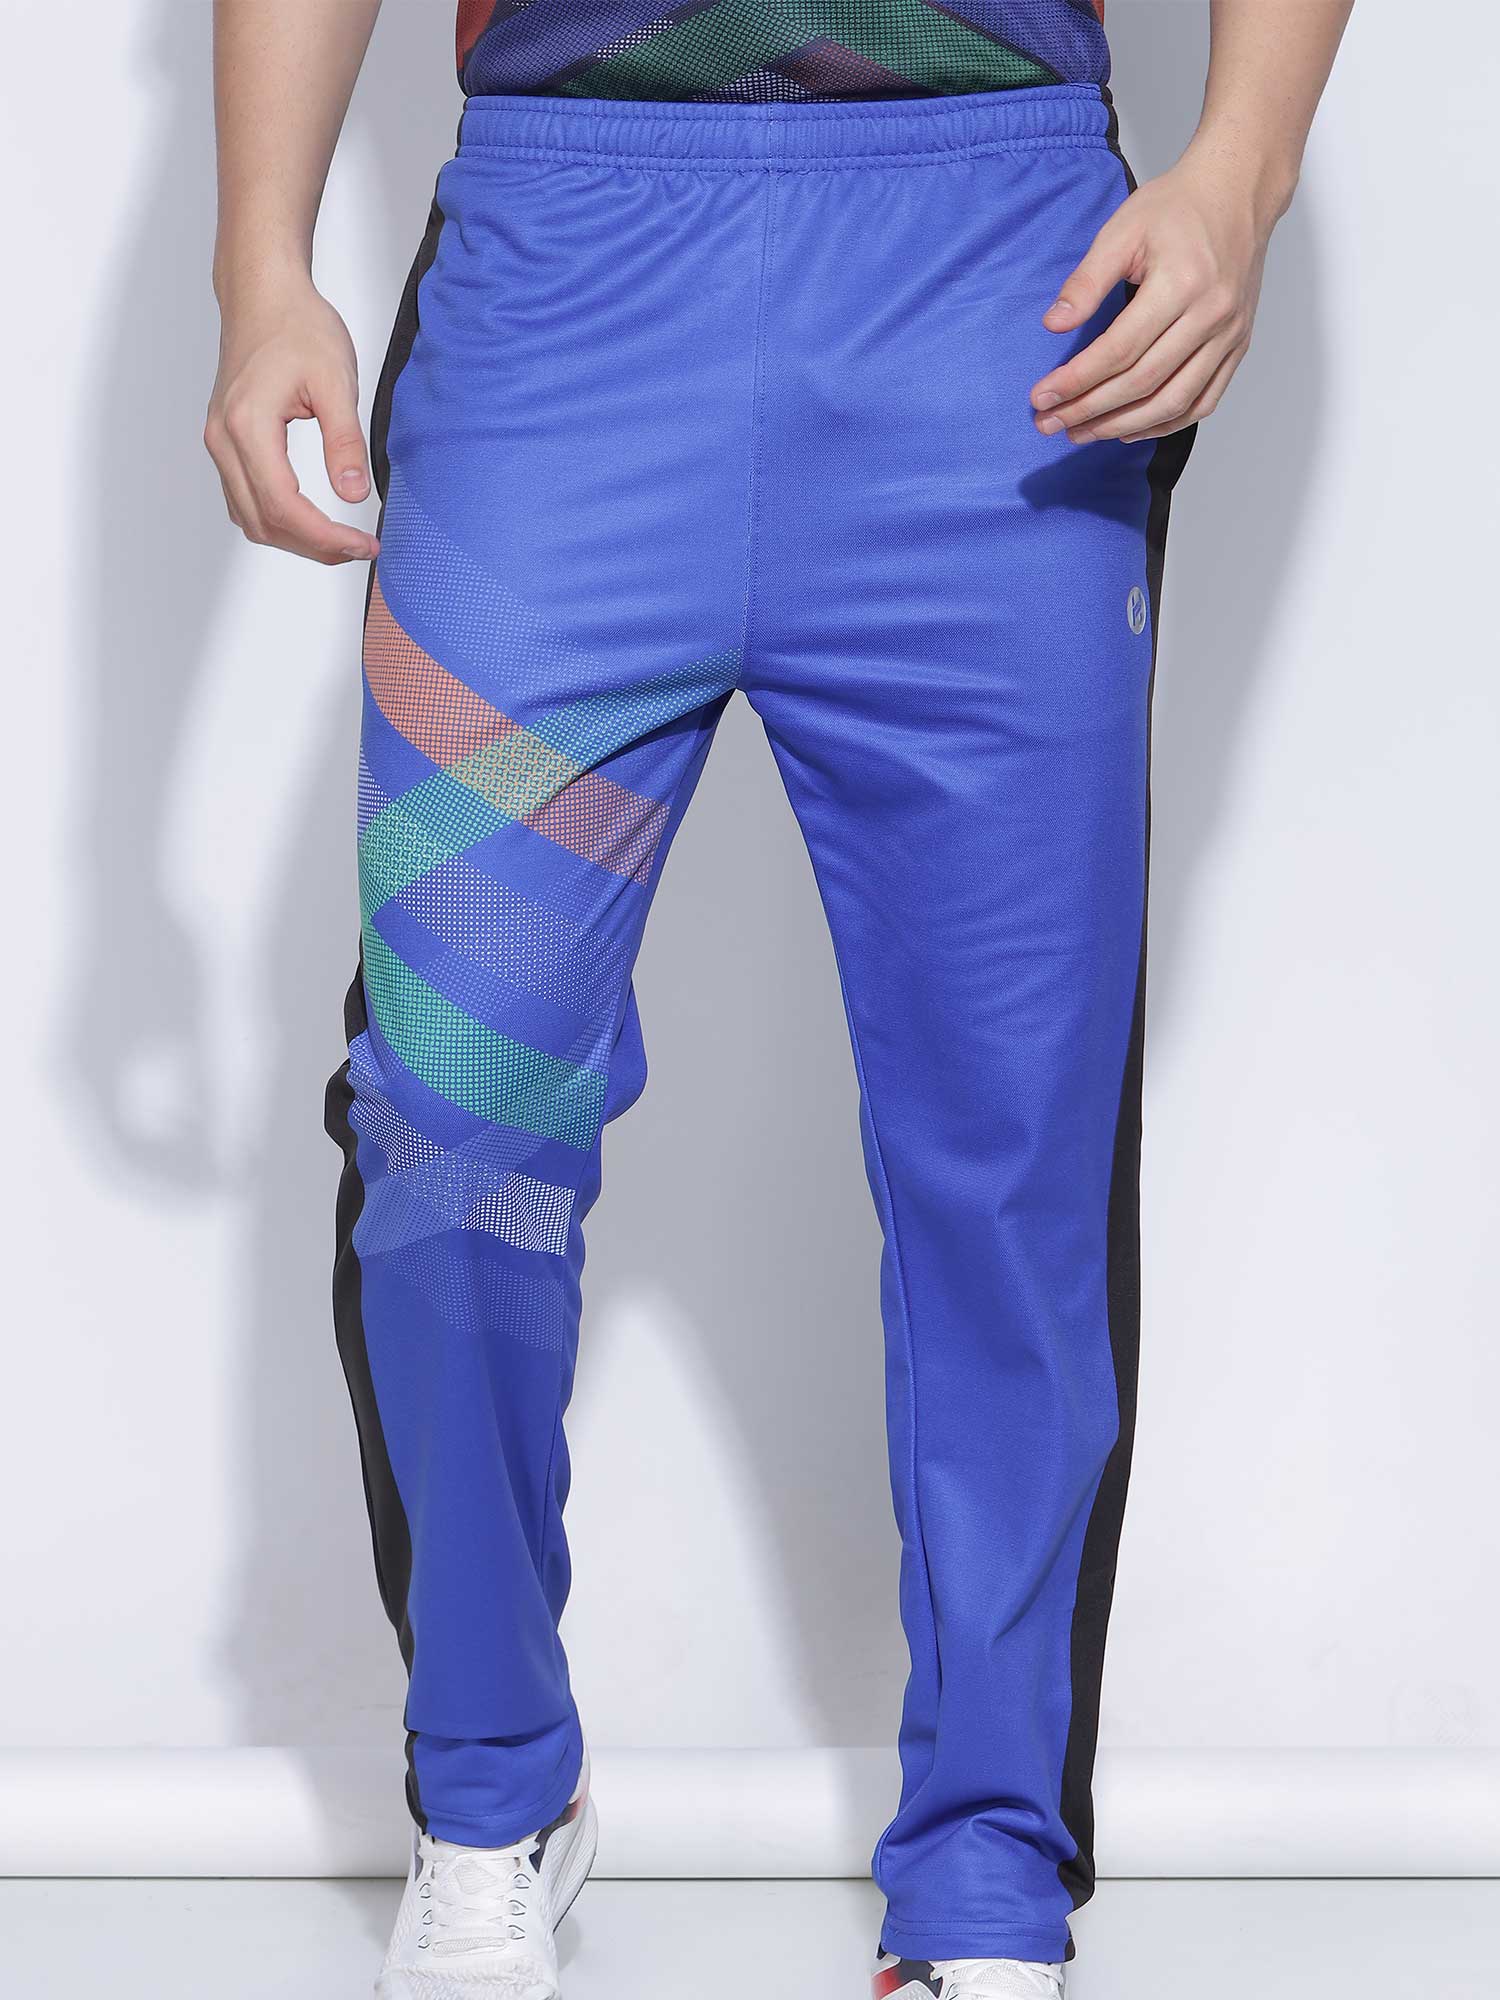 Polo Ralph Lauren Double-Knit Jogger Pants | Dillard's